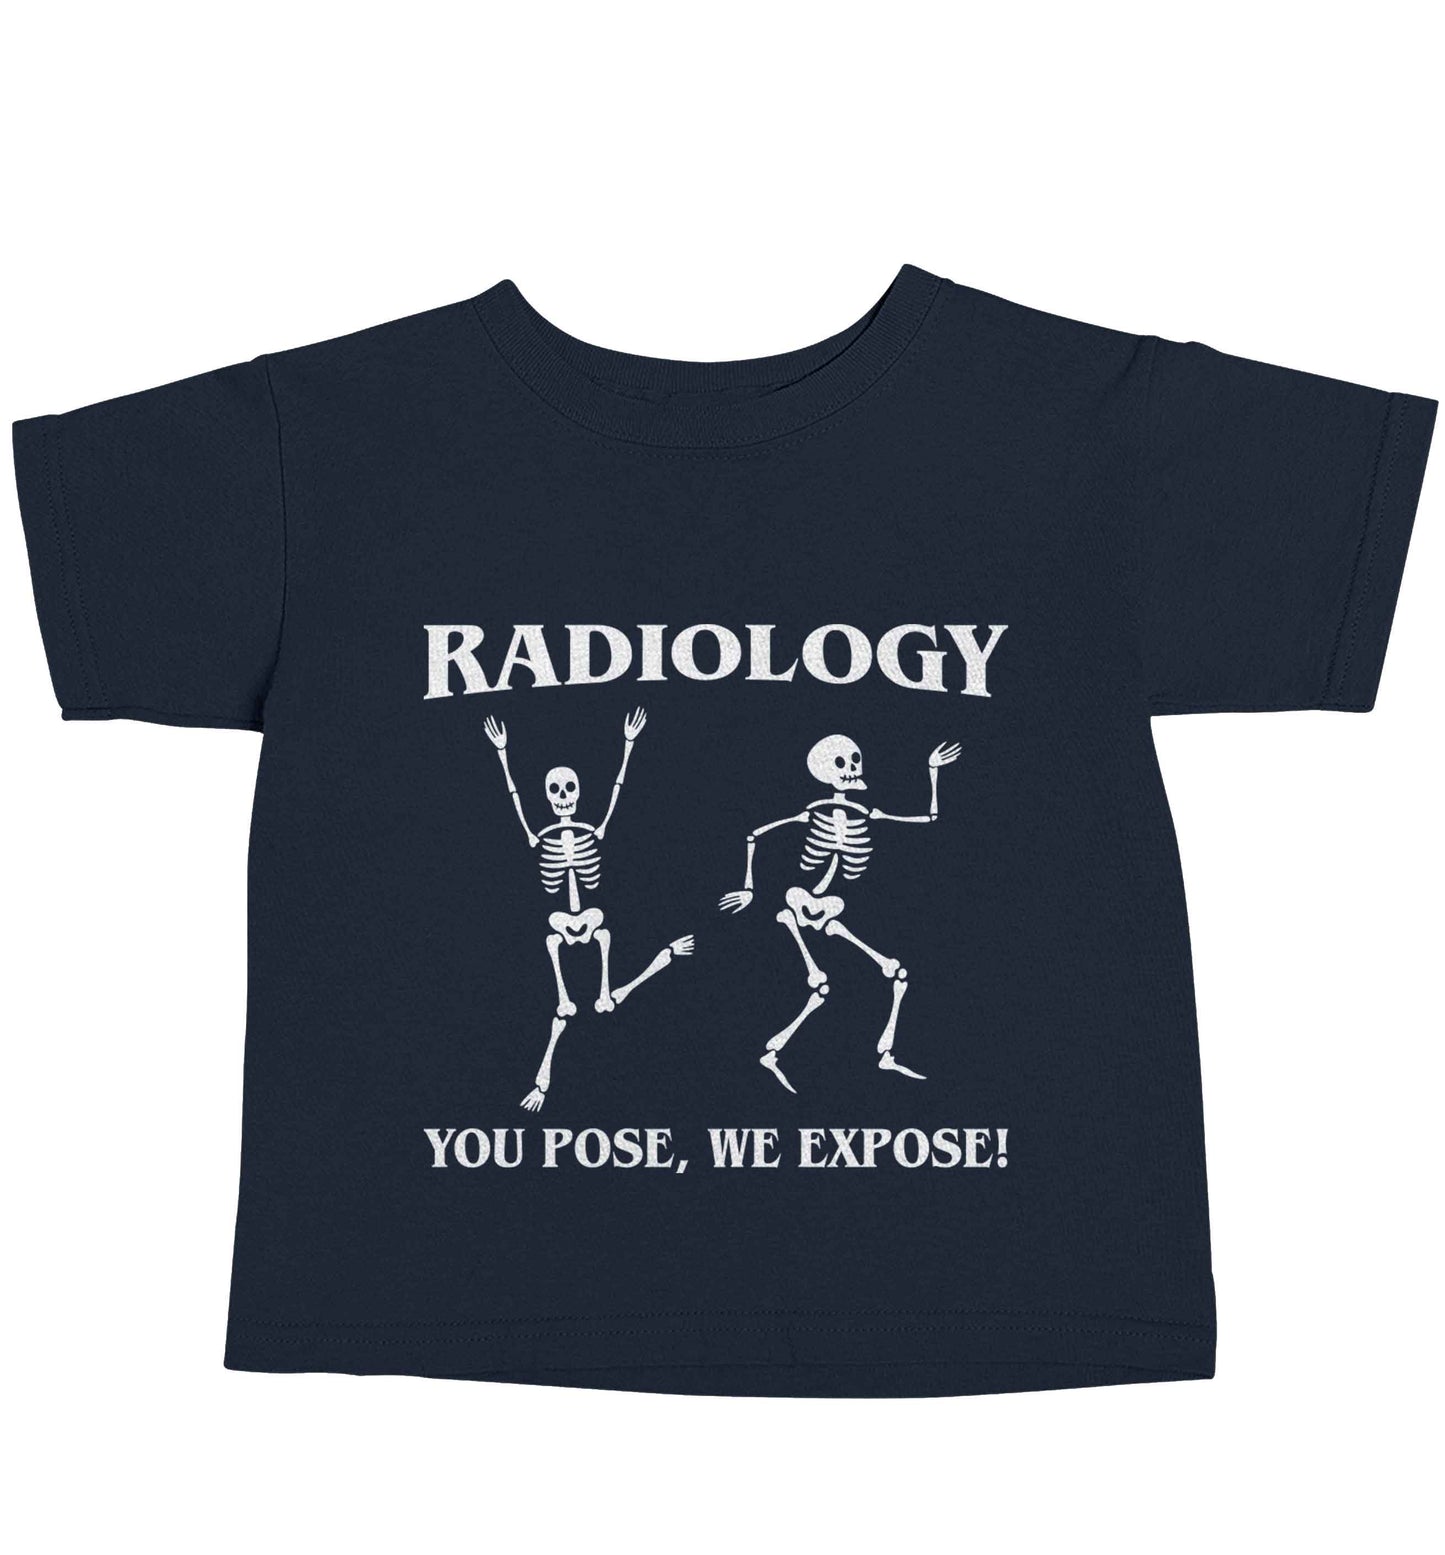 Radiology you pose we expose navy baby toddler Tshirt 2 Years